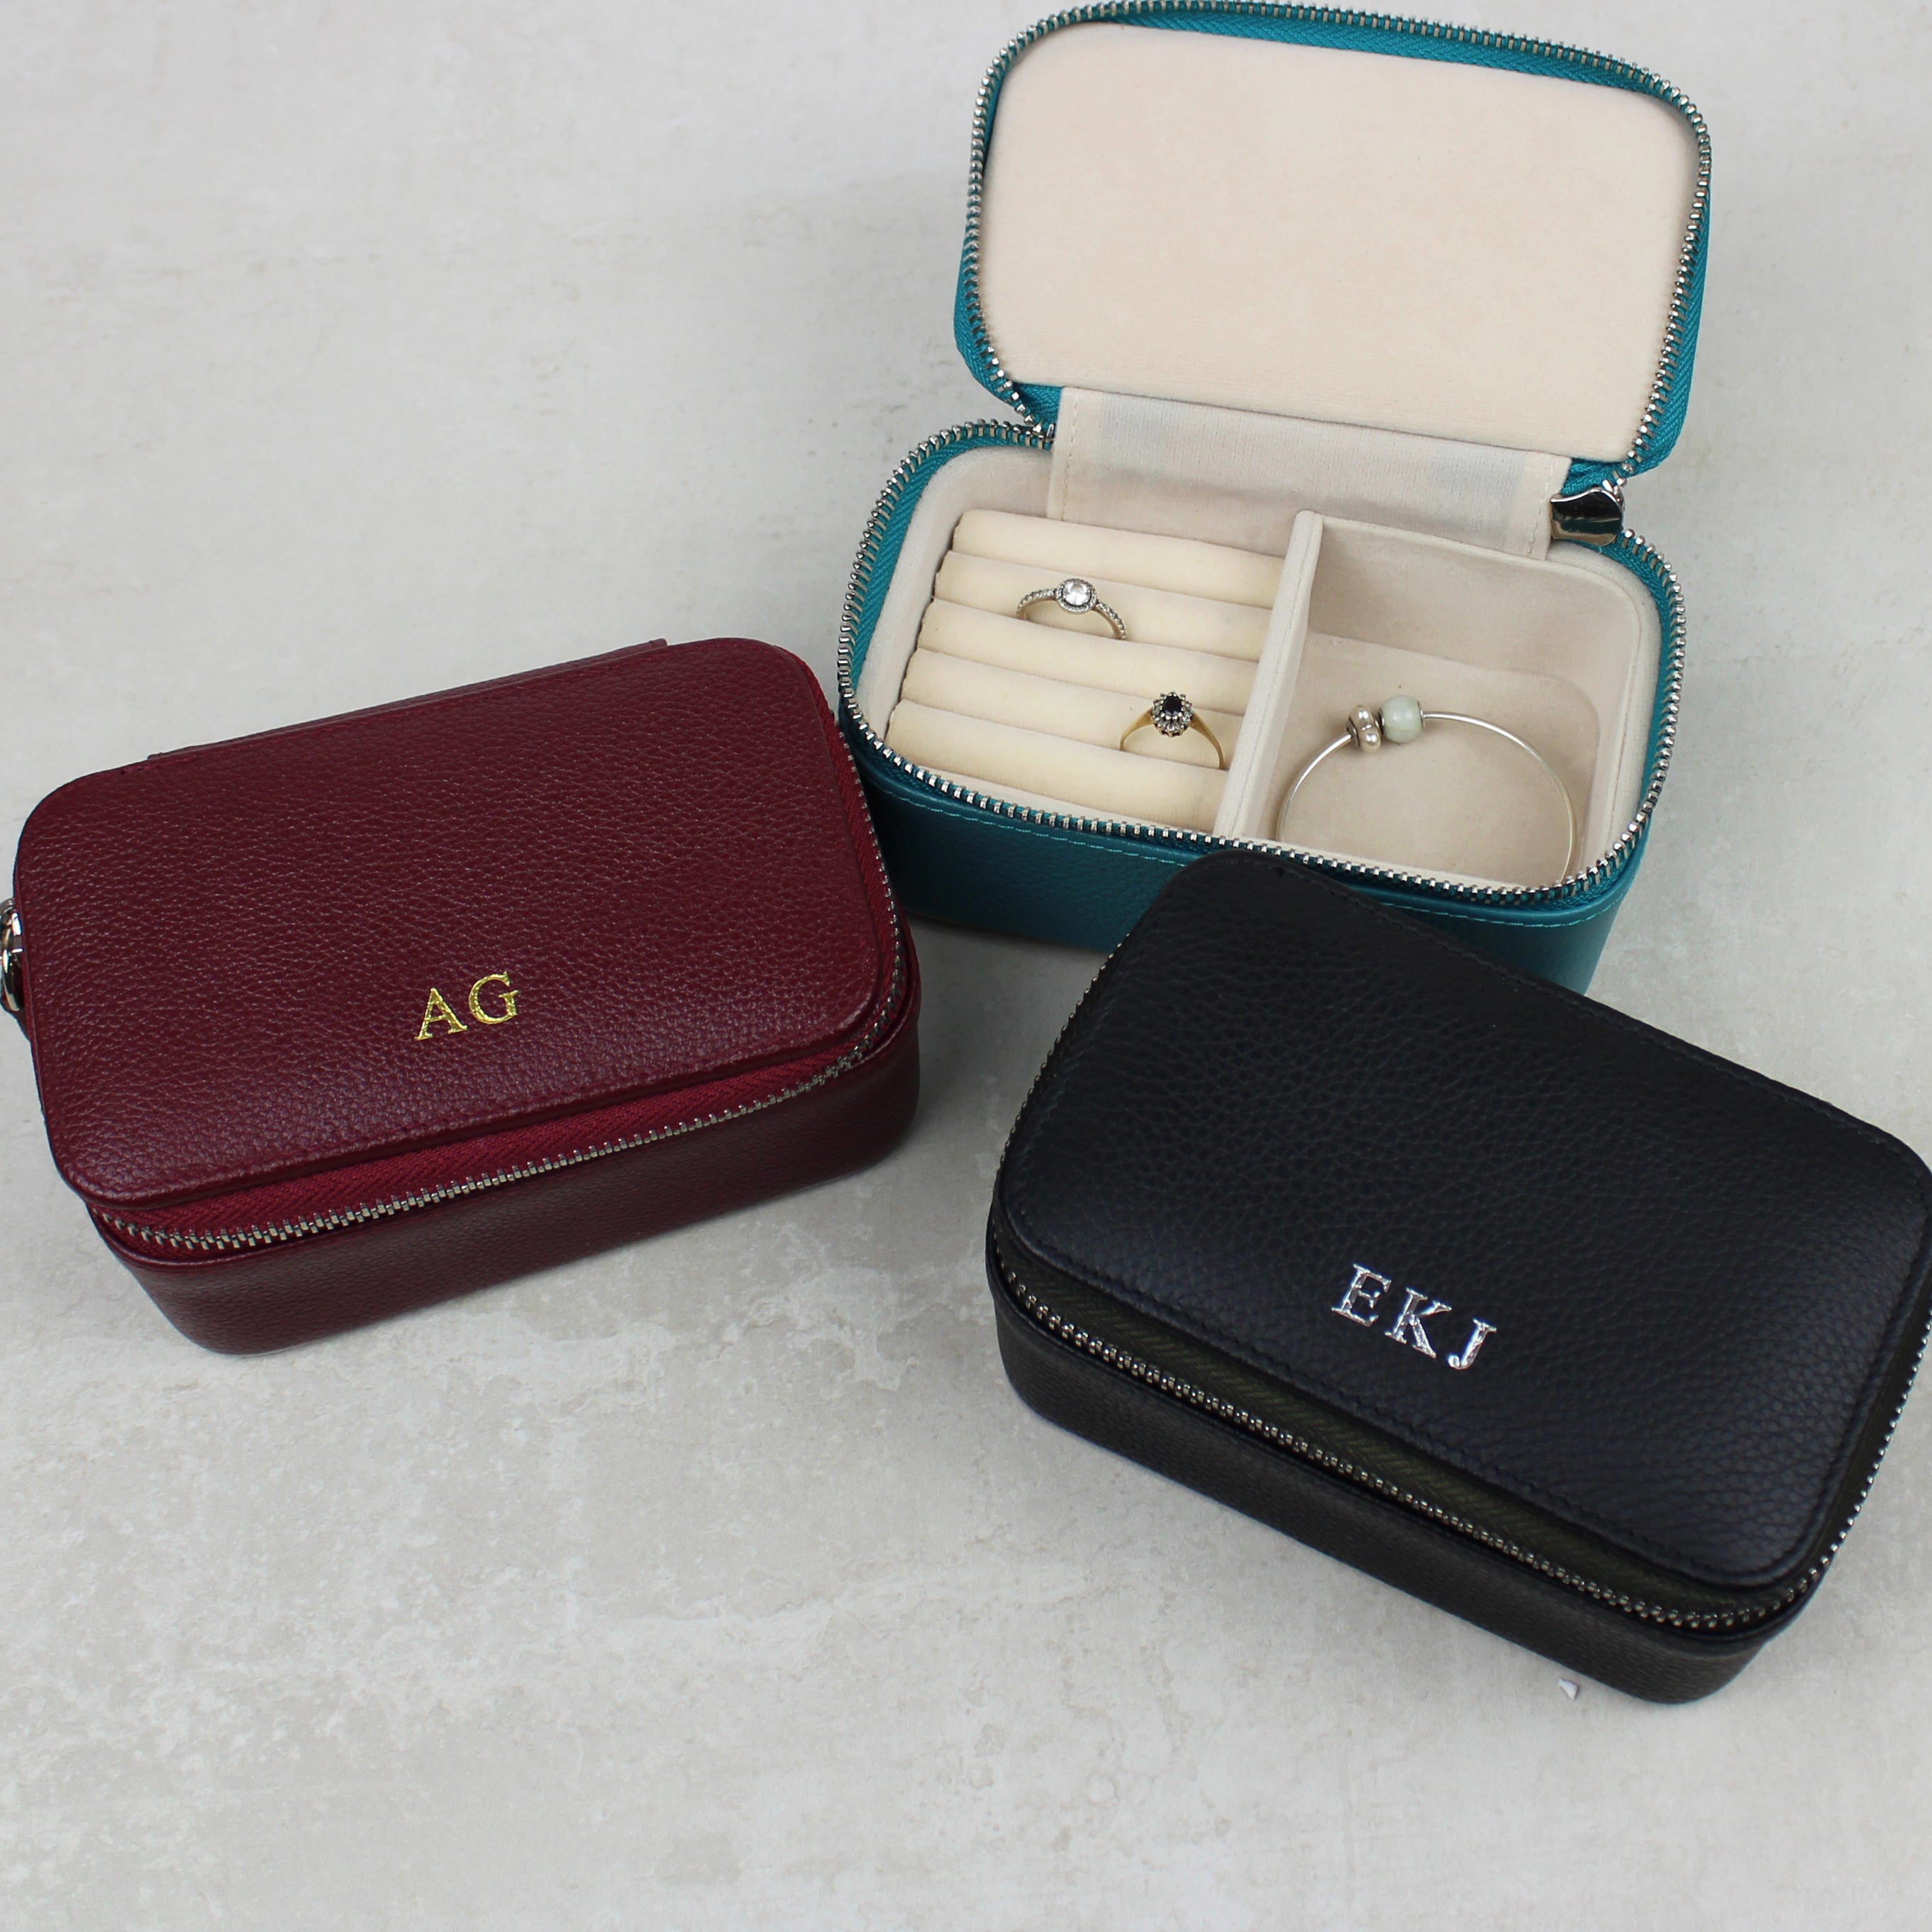 Premium Leather Jewelry Box & Travel Case - Lockable Jewelry